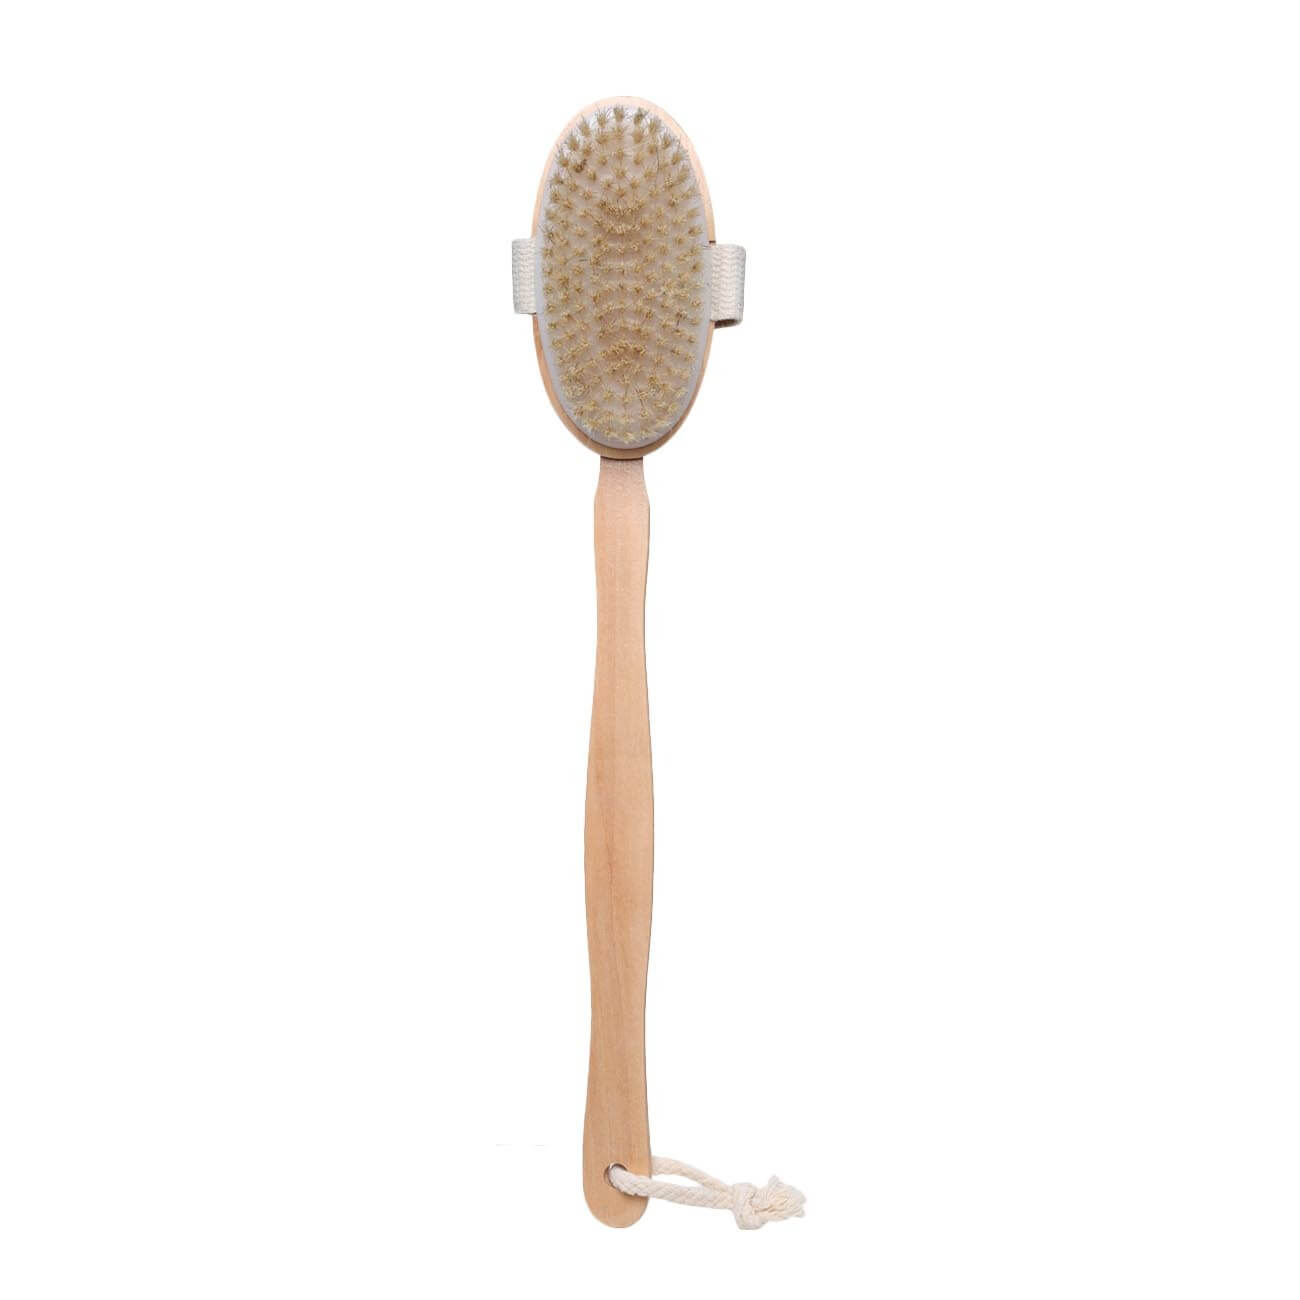 Щетка для сухого массажа, 40 см, с держателем, дерево/нейлон, Bamboo spa щетка пластиковая на ручке 3 7 х 20 5 х 2 9 см